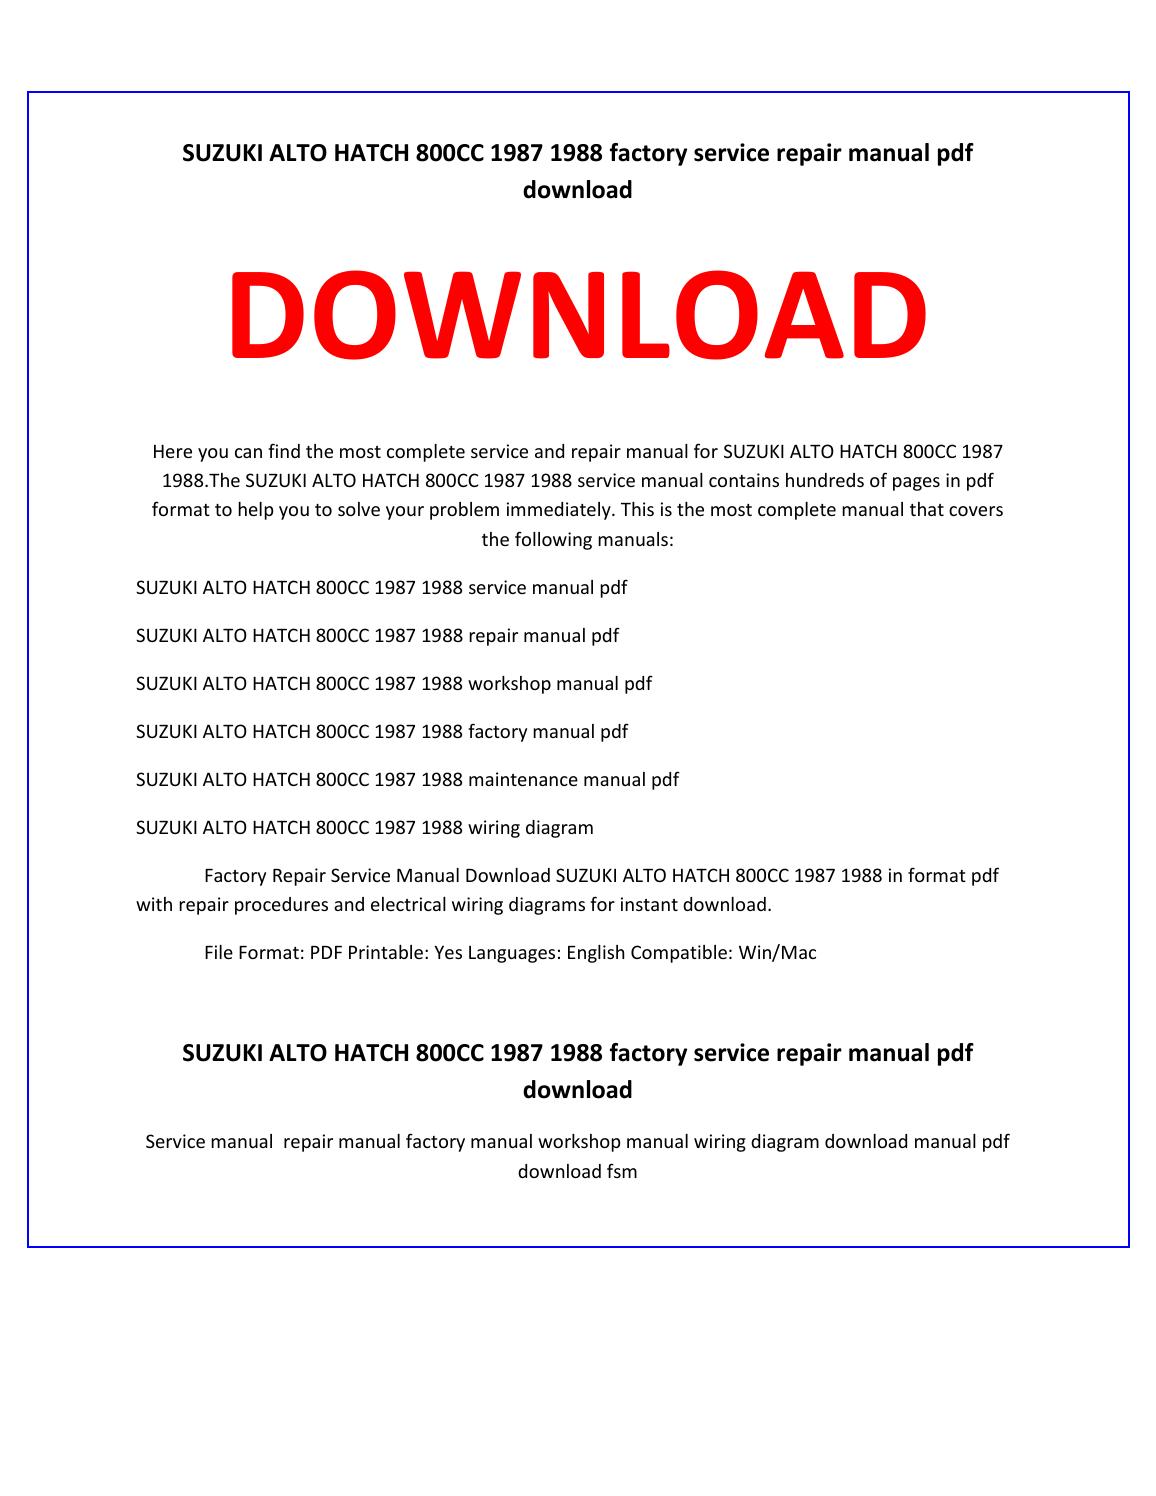 Chevrolet trailblazer service manual download 2017